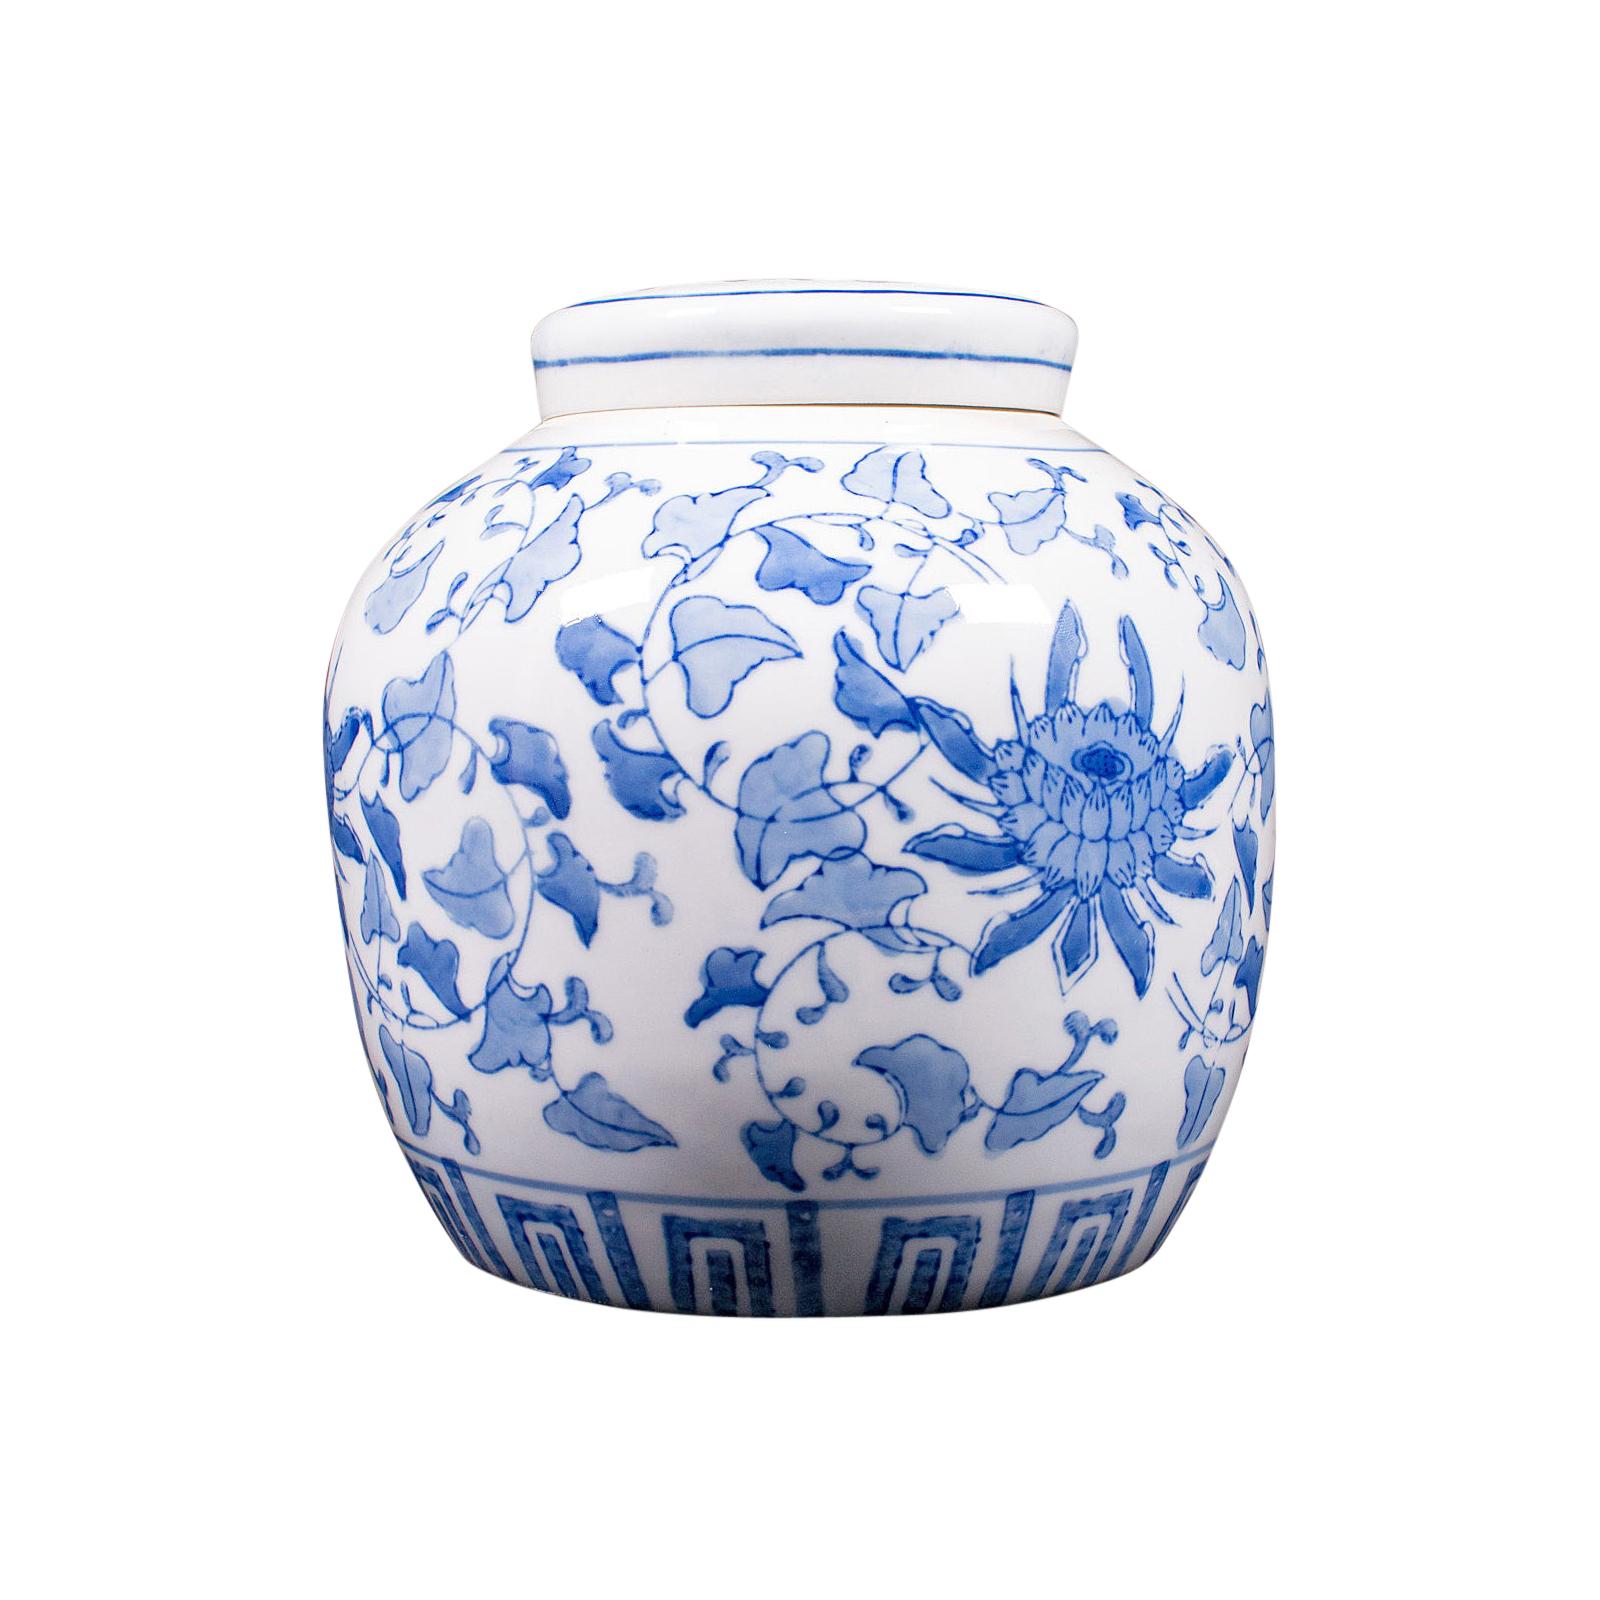 https://a.1stdibscdn.com/vintage-decorative-spice-jar-oriental-ceramic-ginger-tea-caddy-circa-1940-for-sale/1121189/f_246715321627460004532/24671532_master.jpg